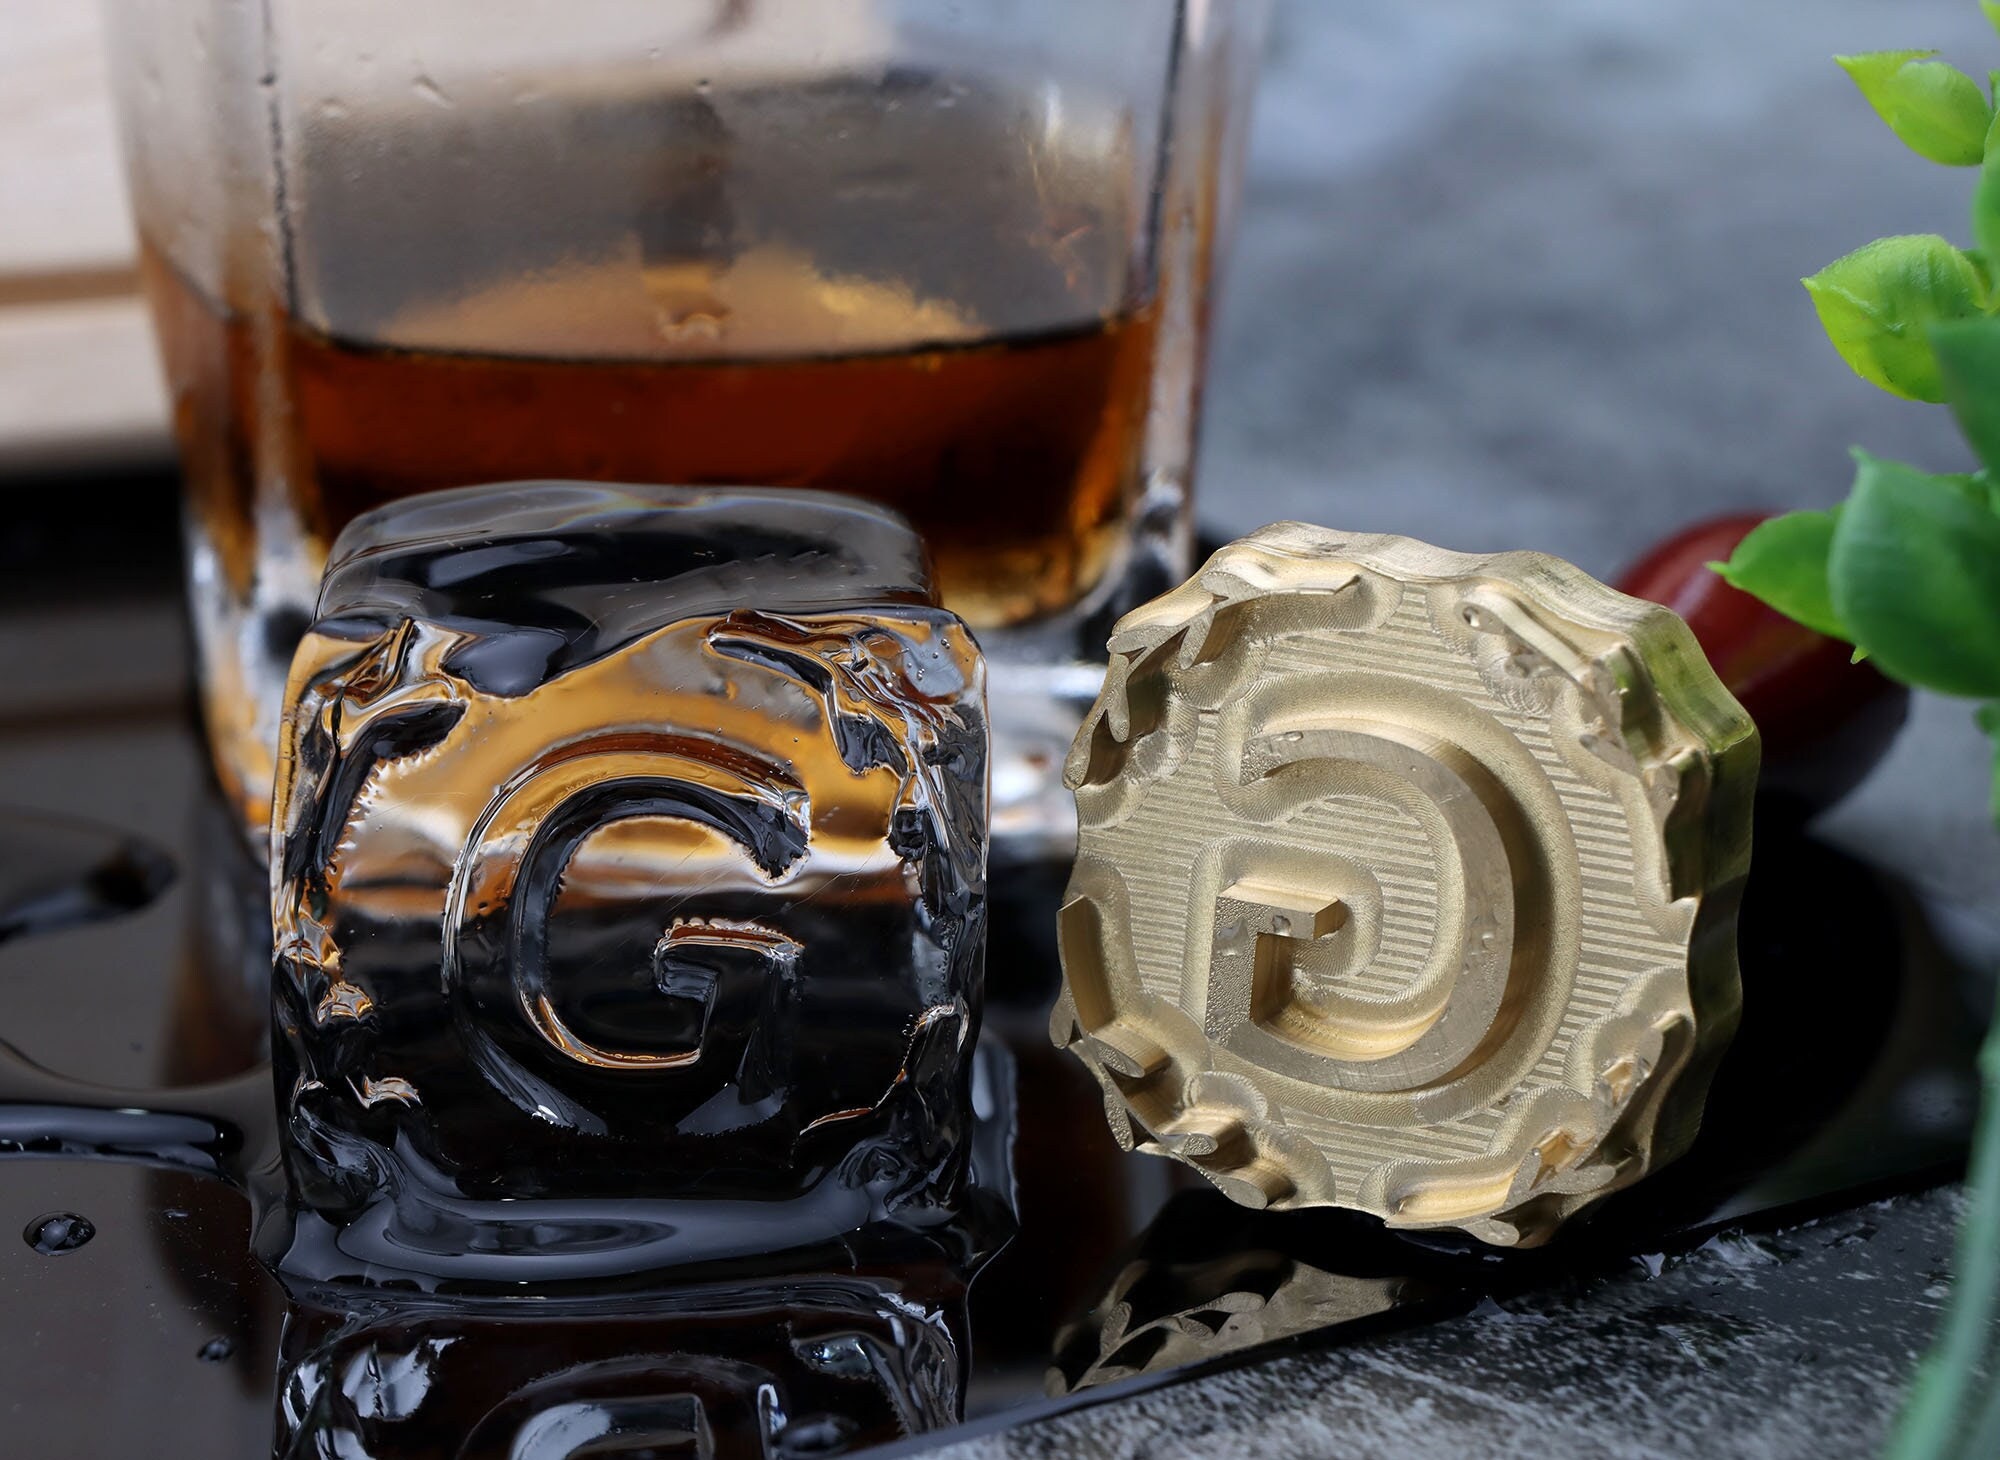 College football whiskey ice mold, Custom college logo whiskey ice cub –  Speakeasy Ice Molds